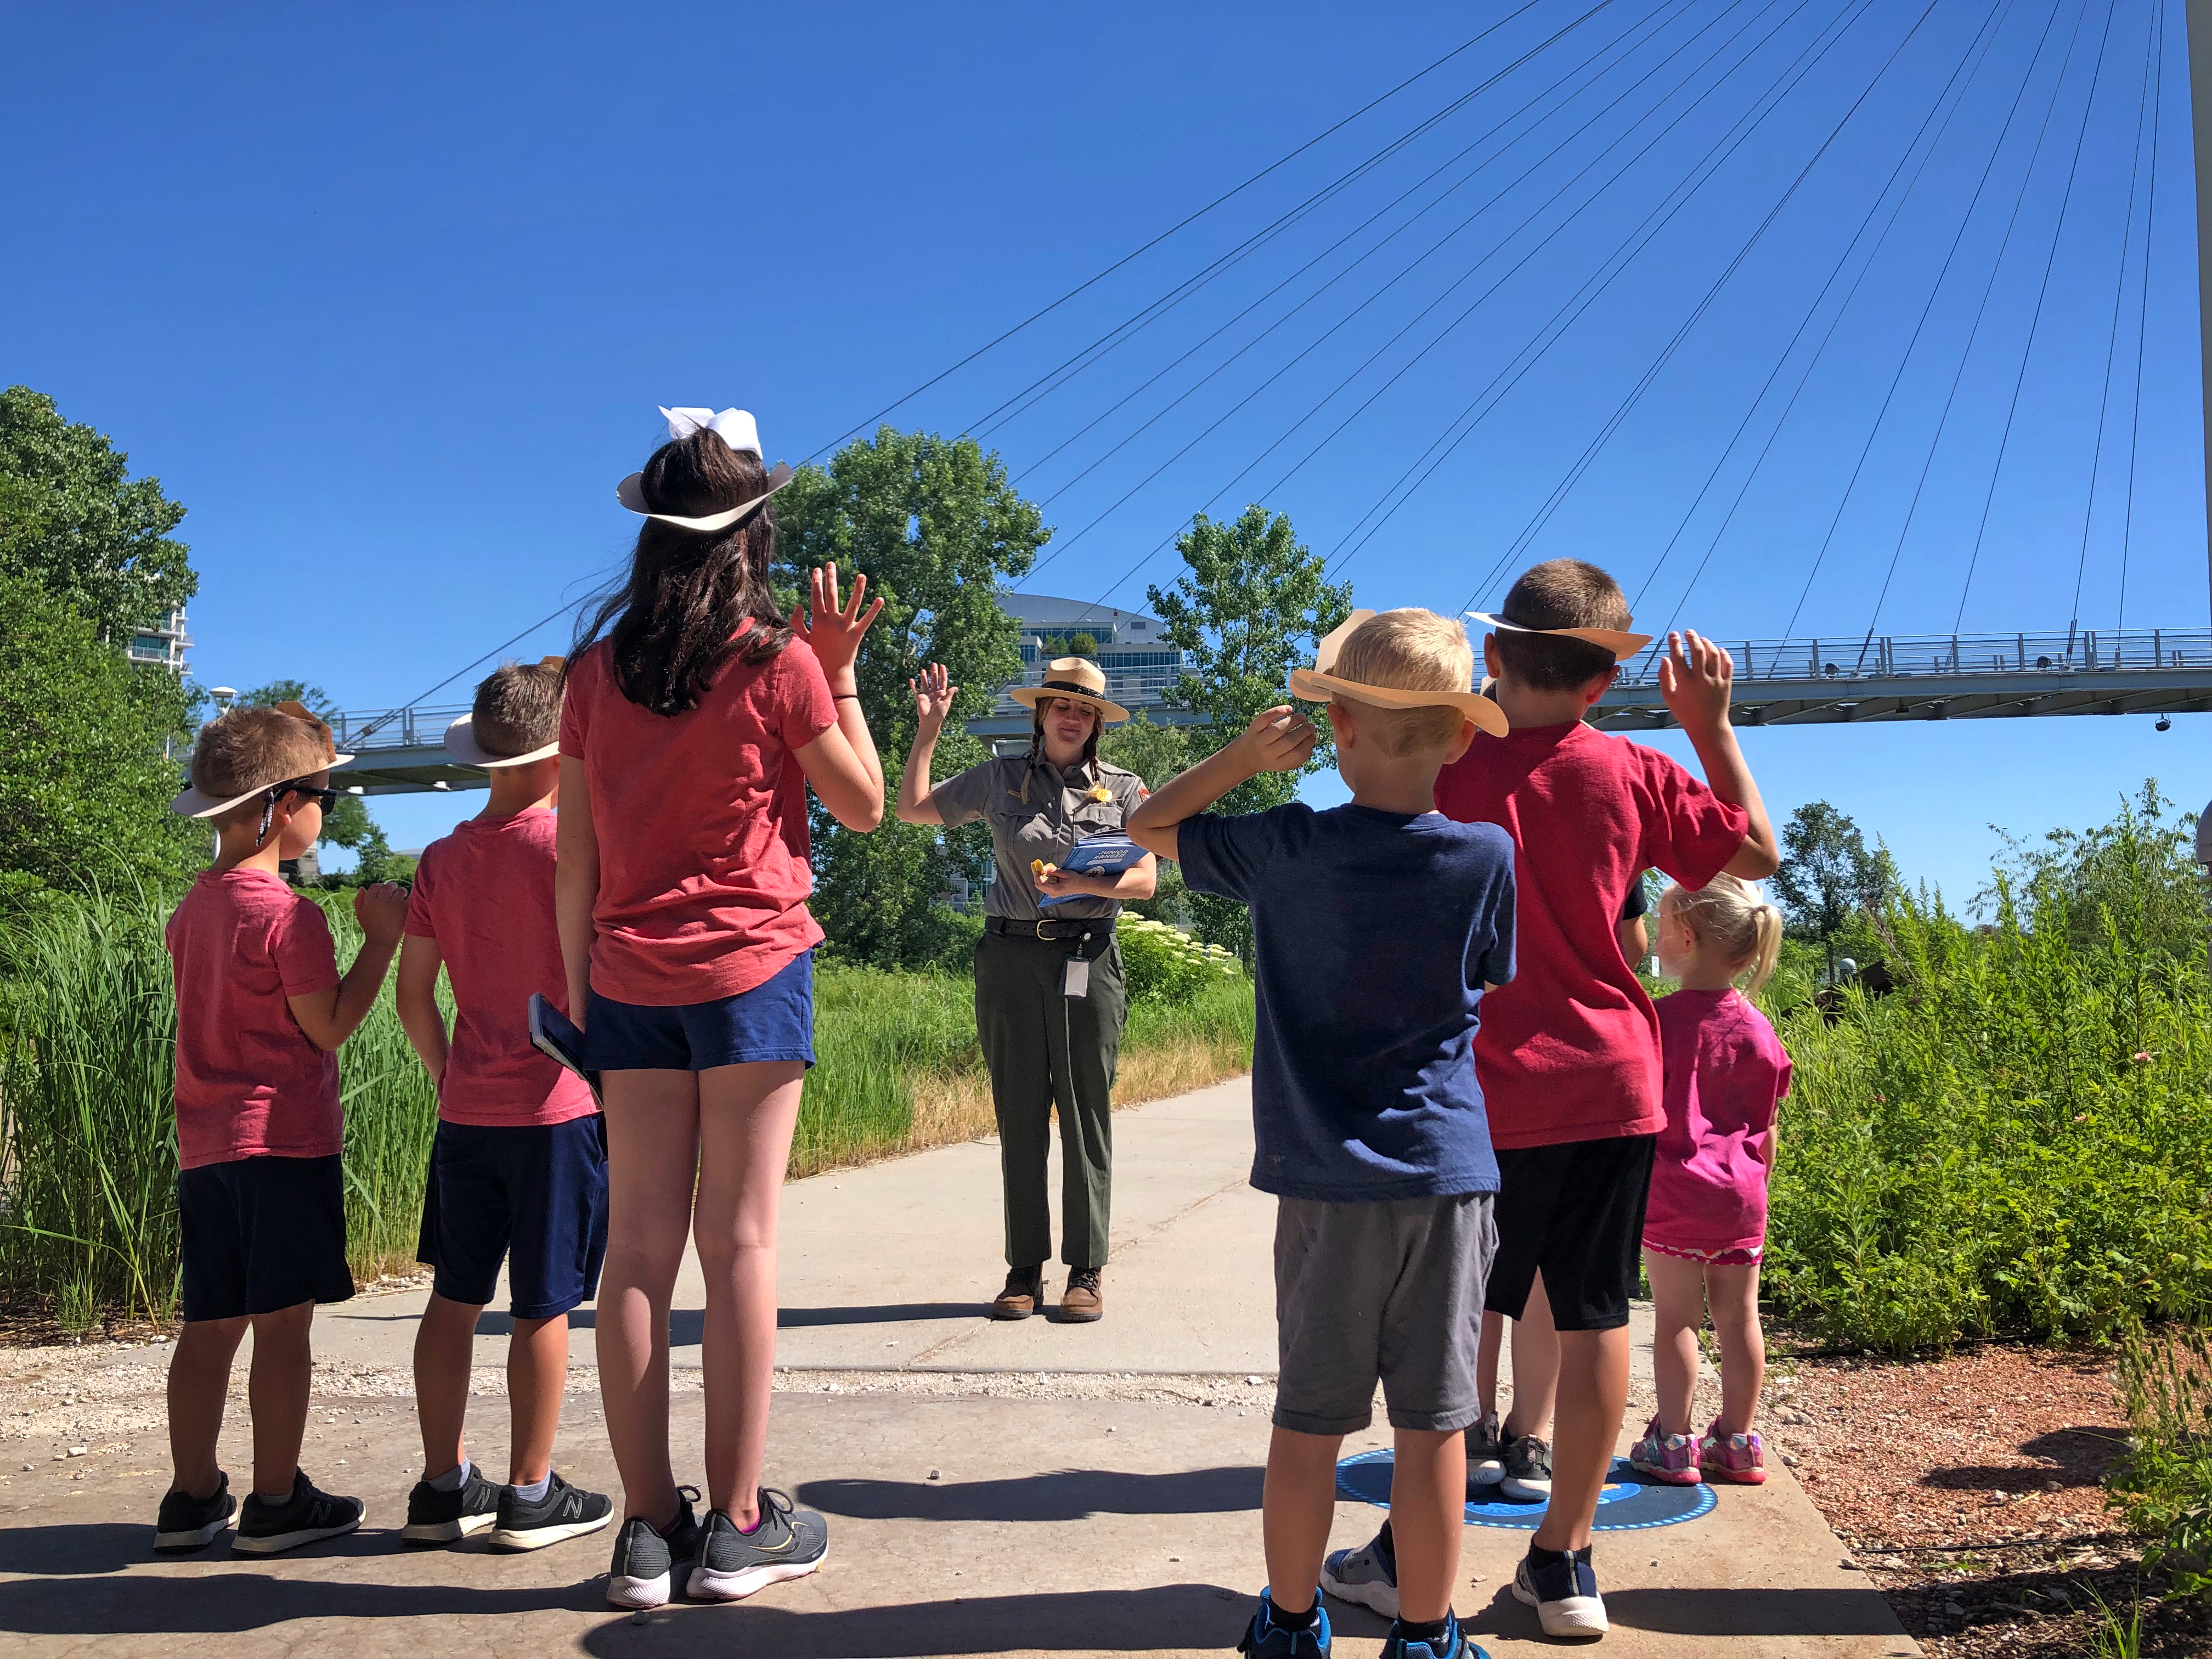 Ranger leads group of children in Junior Ranger Pledge. All stand wit their right hands raised. Bridge in background